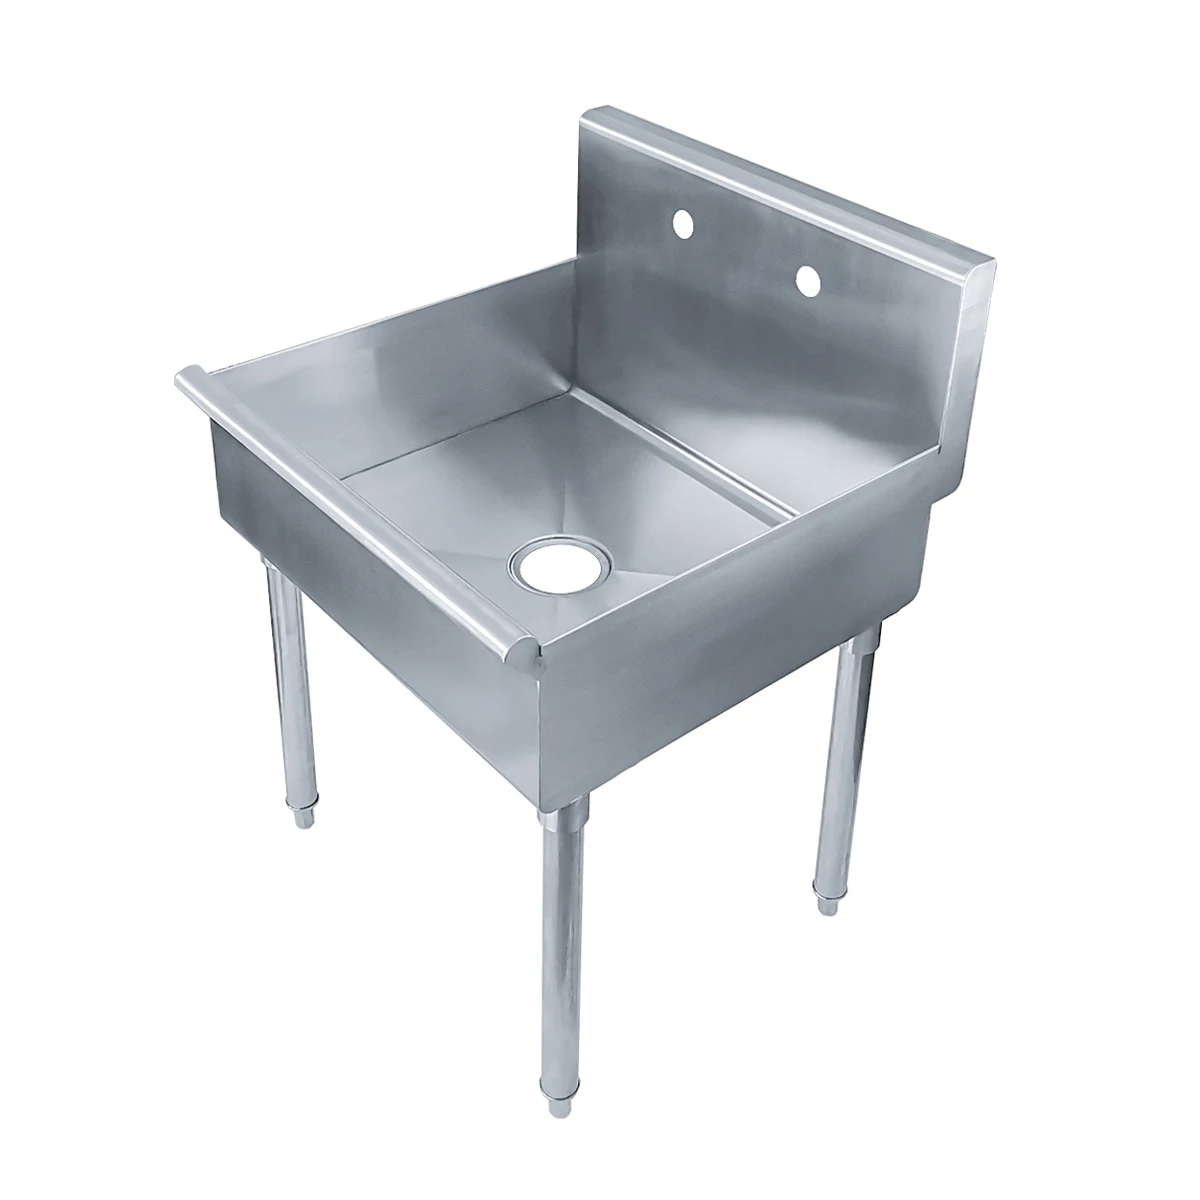 Stainless Steel Single Ecolab Edmonton Examplec Ompartment Sink Buy Compartment Sink Ecolab